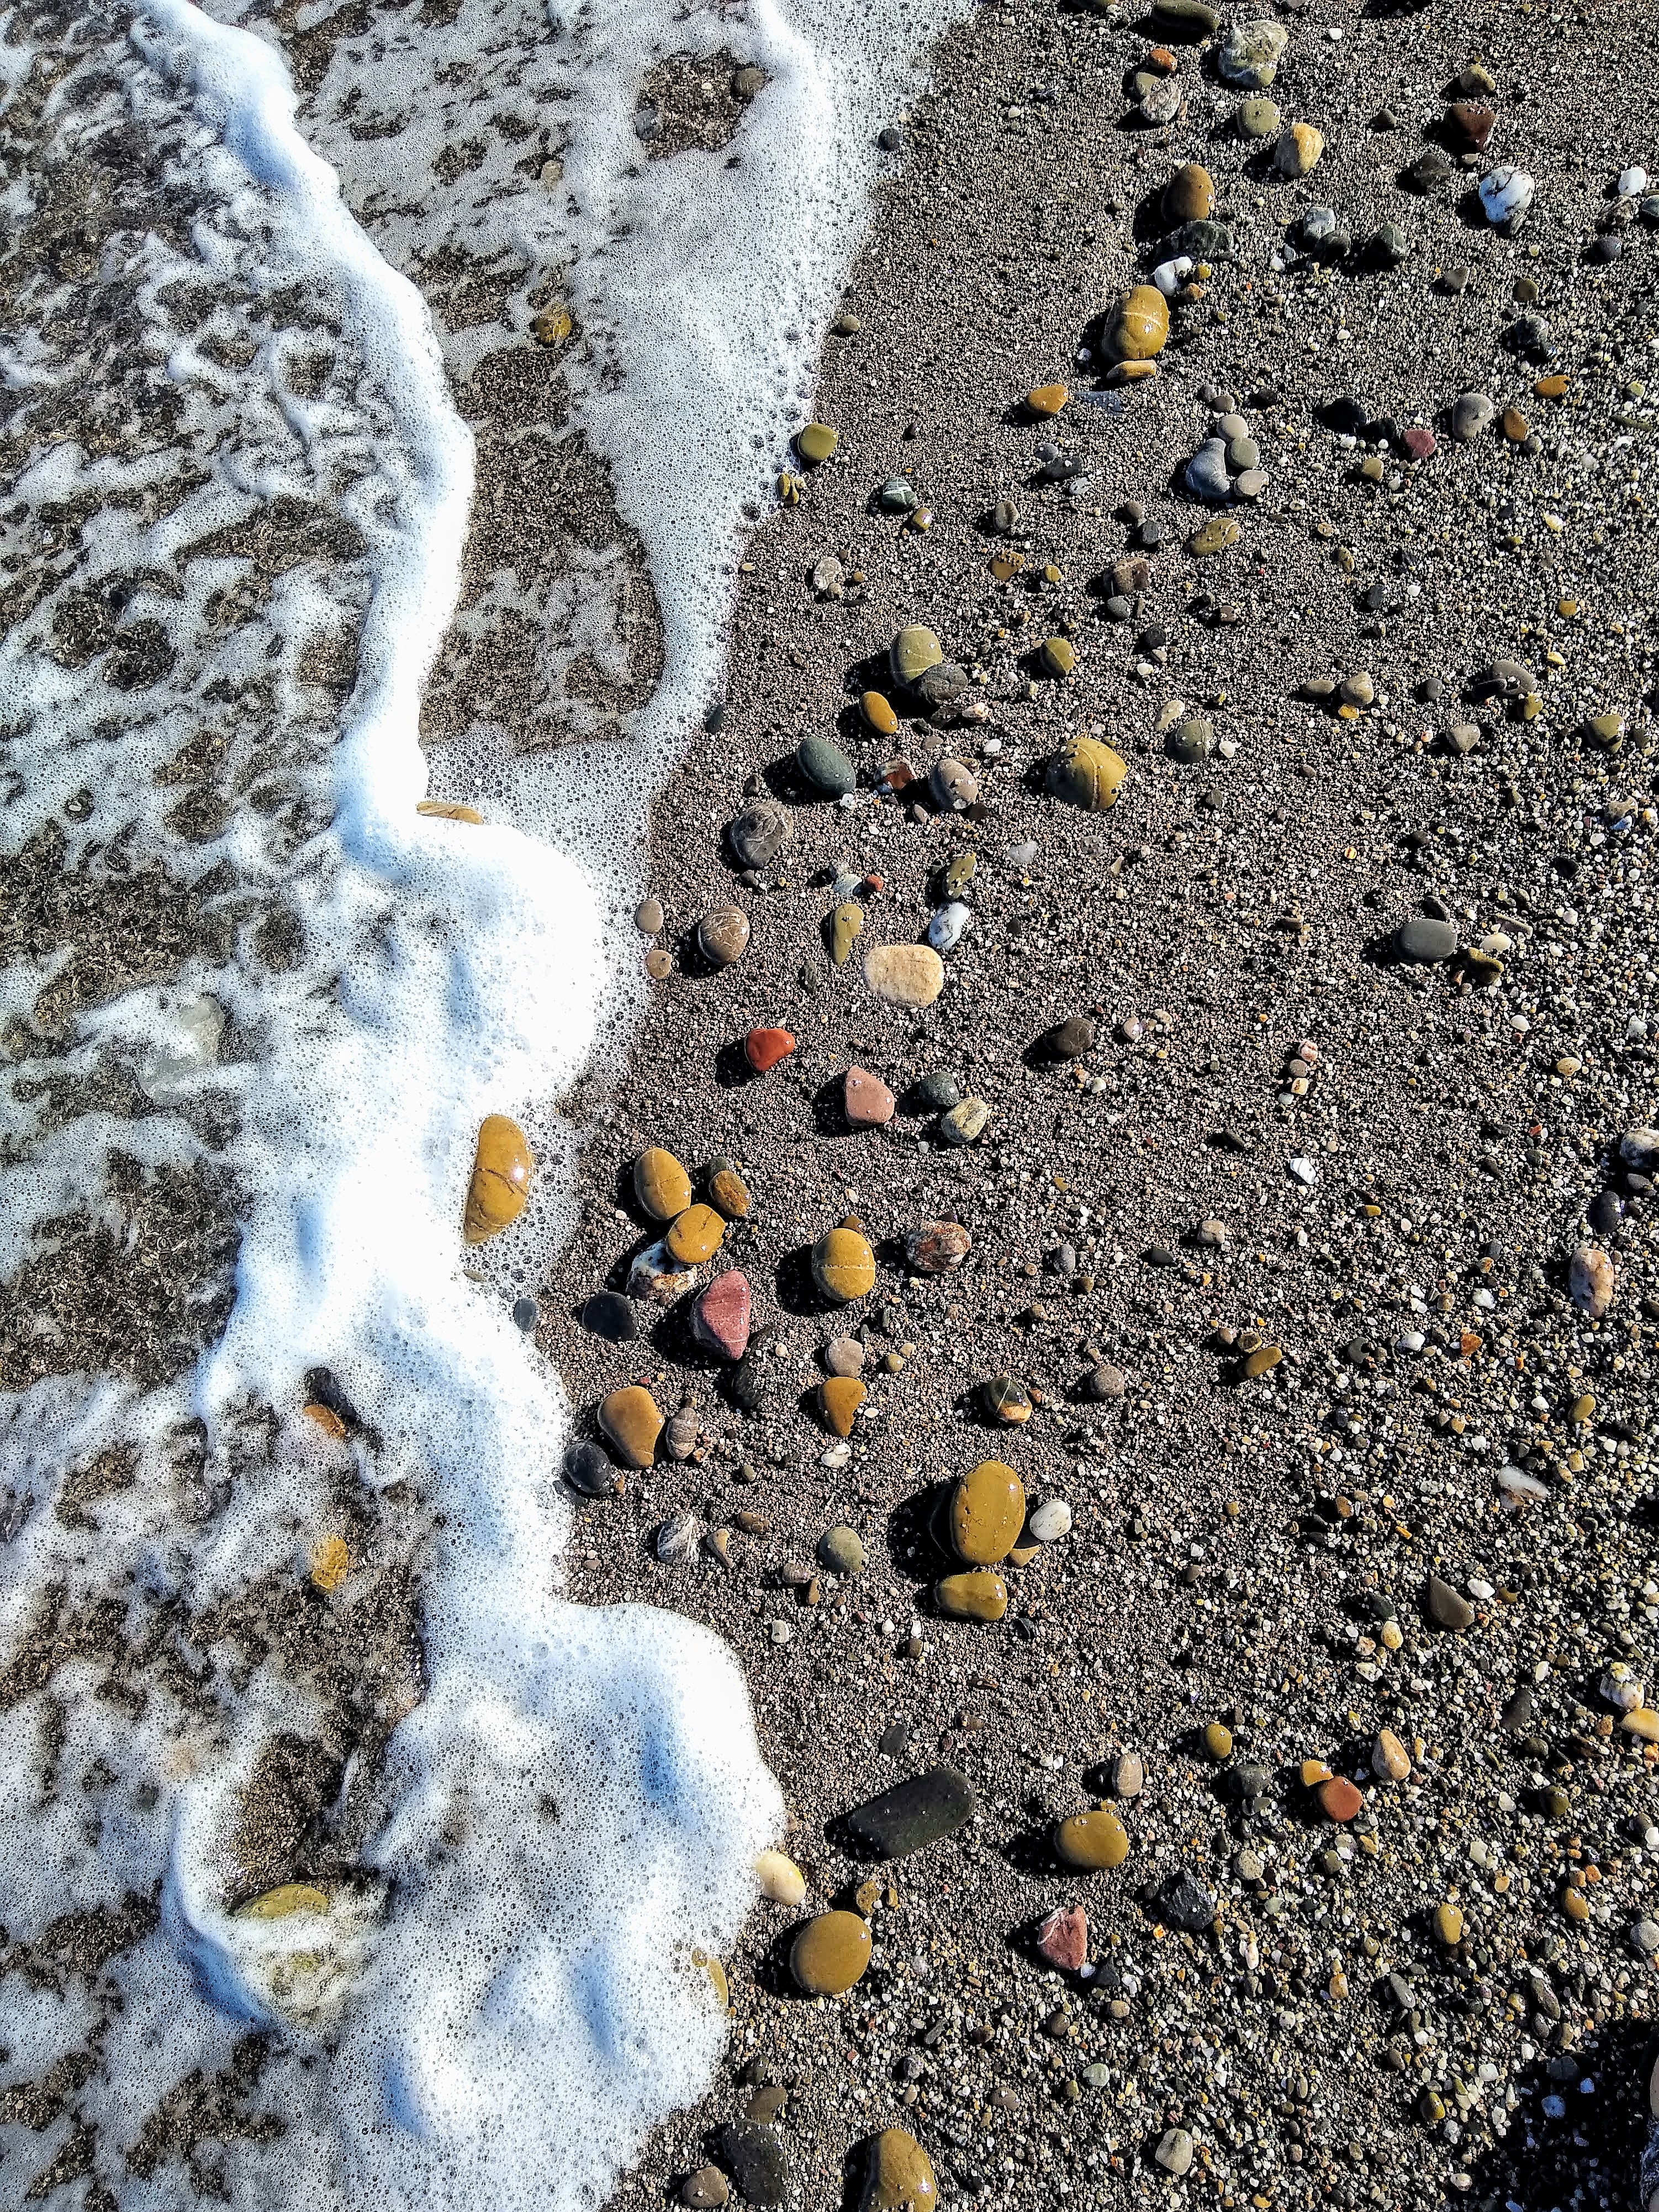 The Mediterranean Sea, near Tetouan, Morocco - close up of sand and pebbles